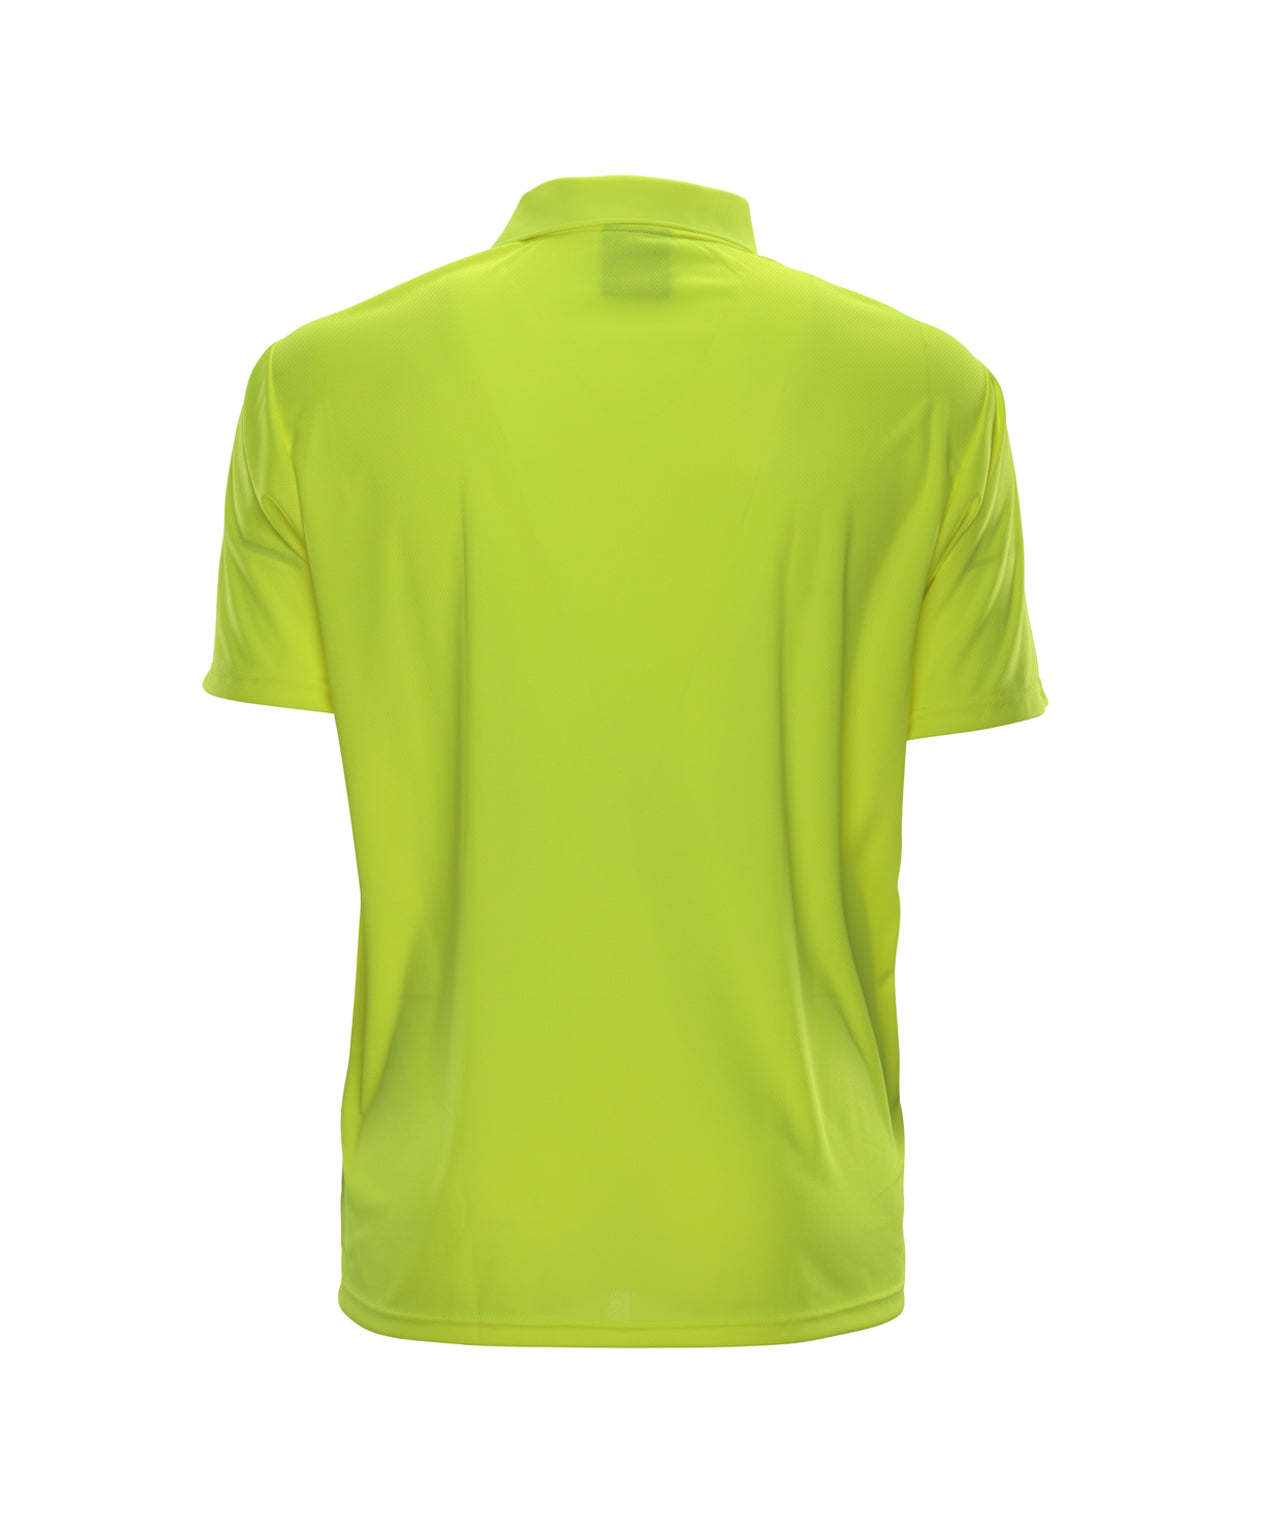 Lime Birdseye Knit Reflective Shirt: 300BLM – Reflective